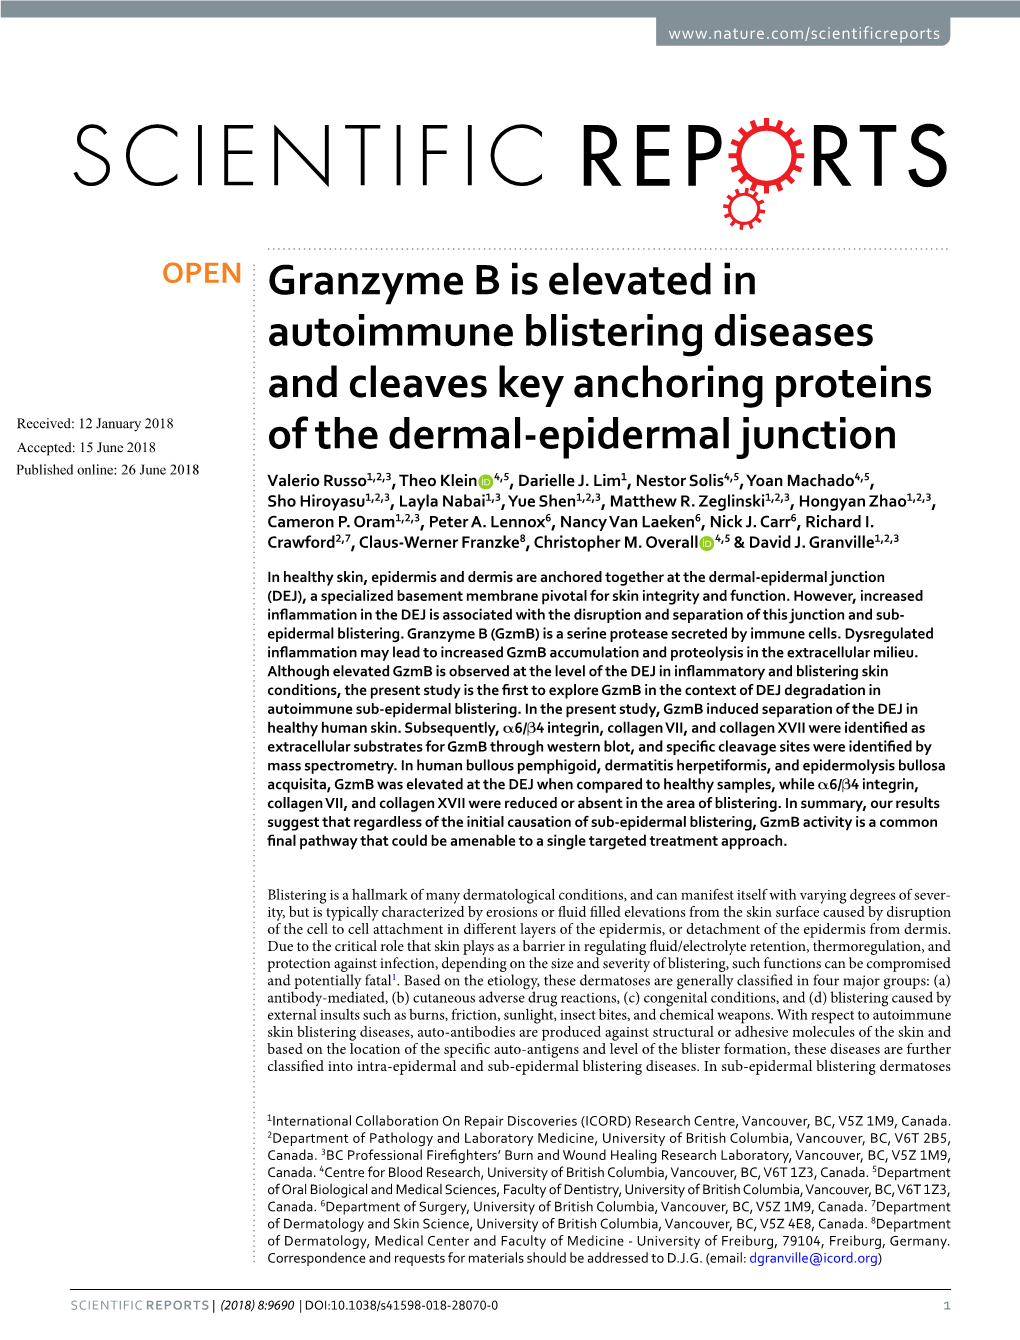 Granzyme B Is Elevated in Autoimmune Blistering Diseases